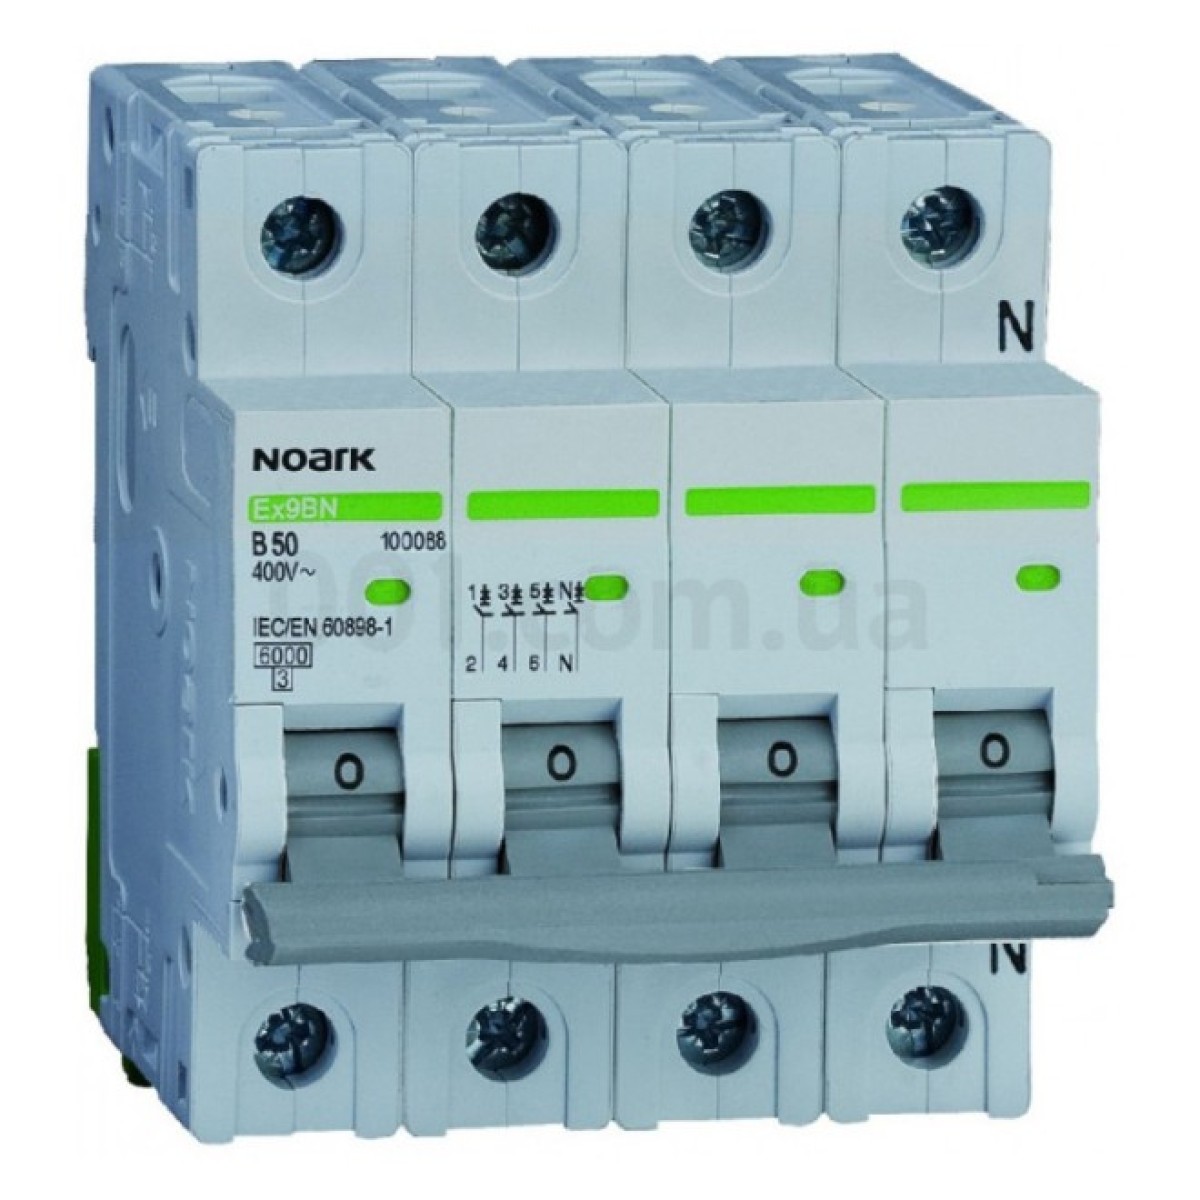 Модульный автоматический выключатель Ex9BN 6kA хар-ка C 40A 3P+N, NOARK 256_256.jpg